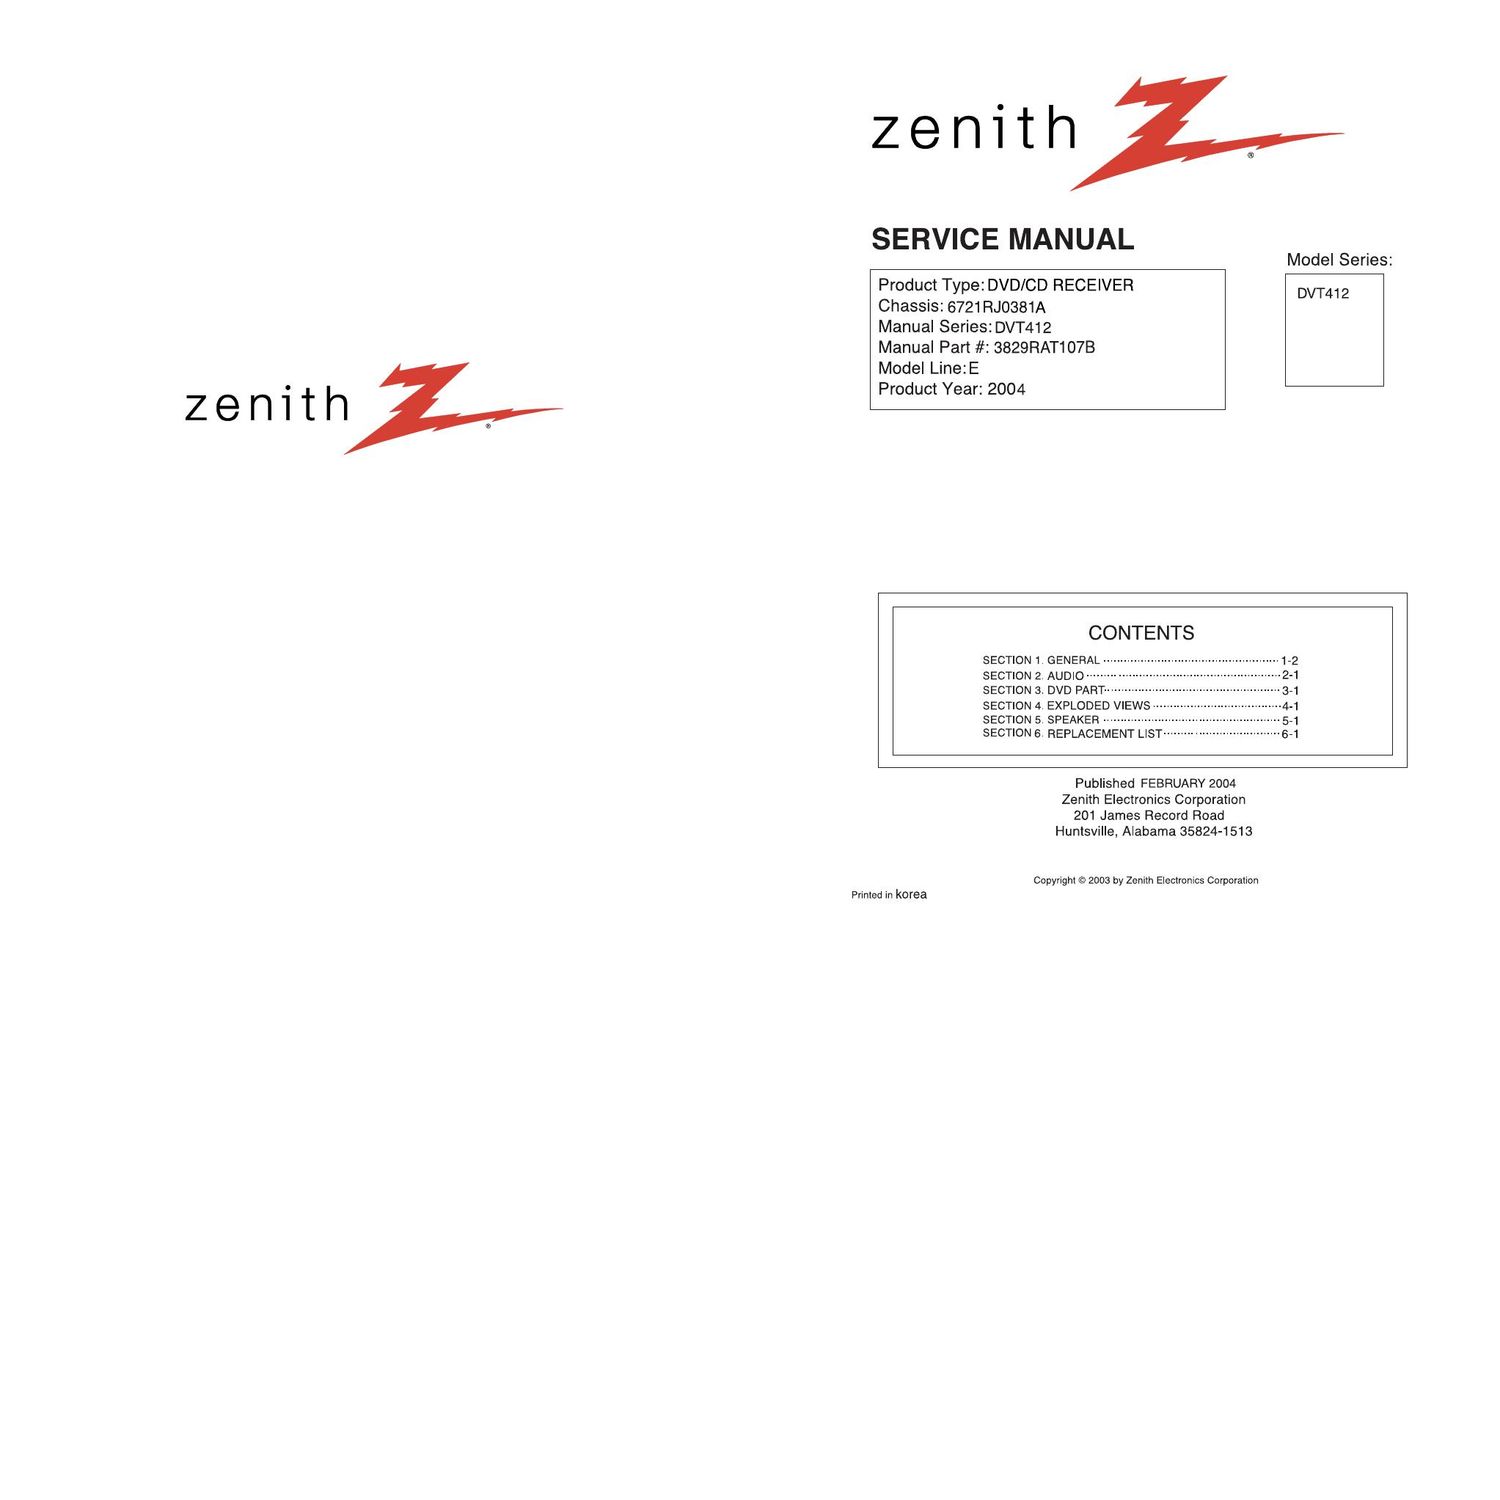 zenith dvt 412 service manual